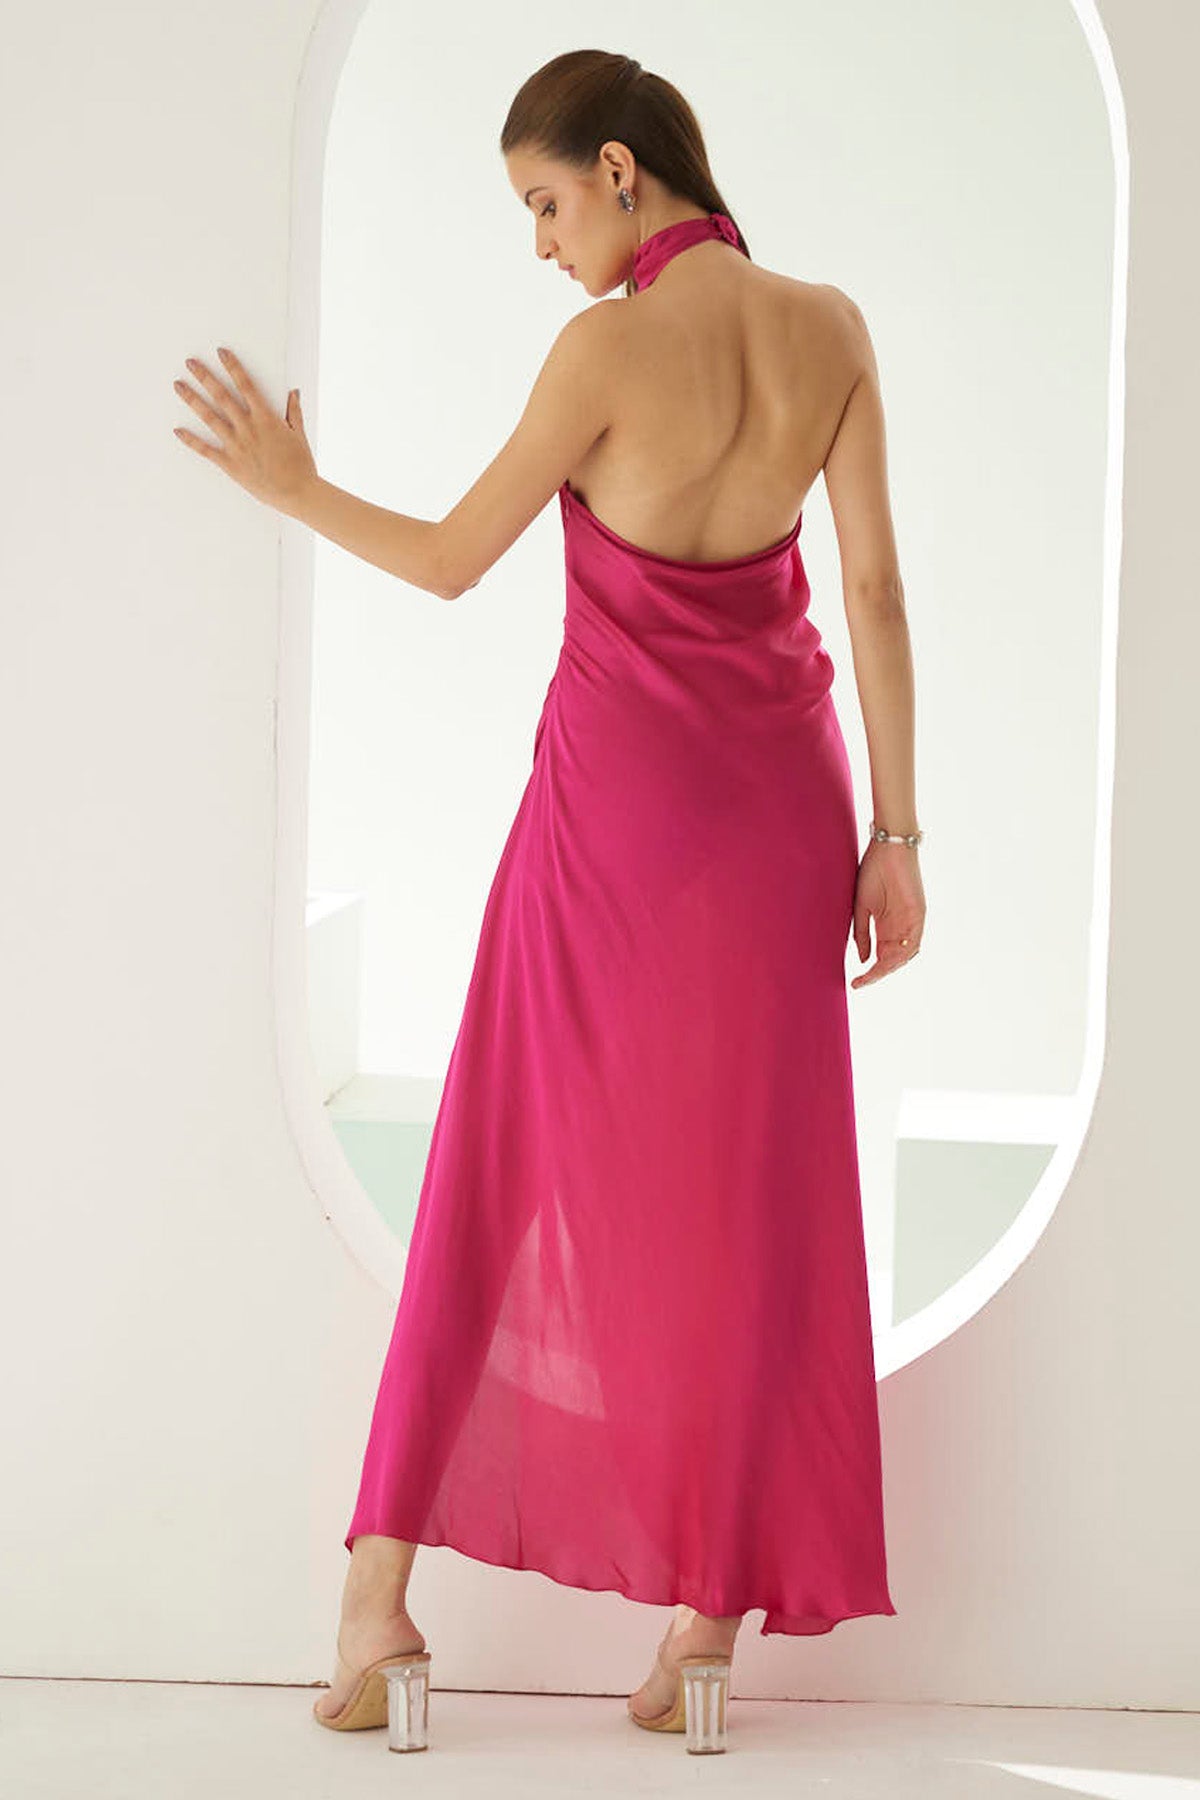 Hot Pink Halter Modal Dress